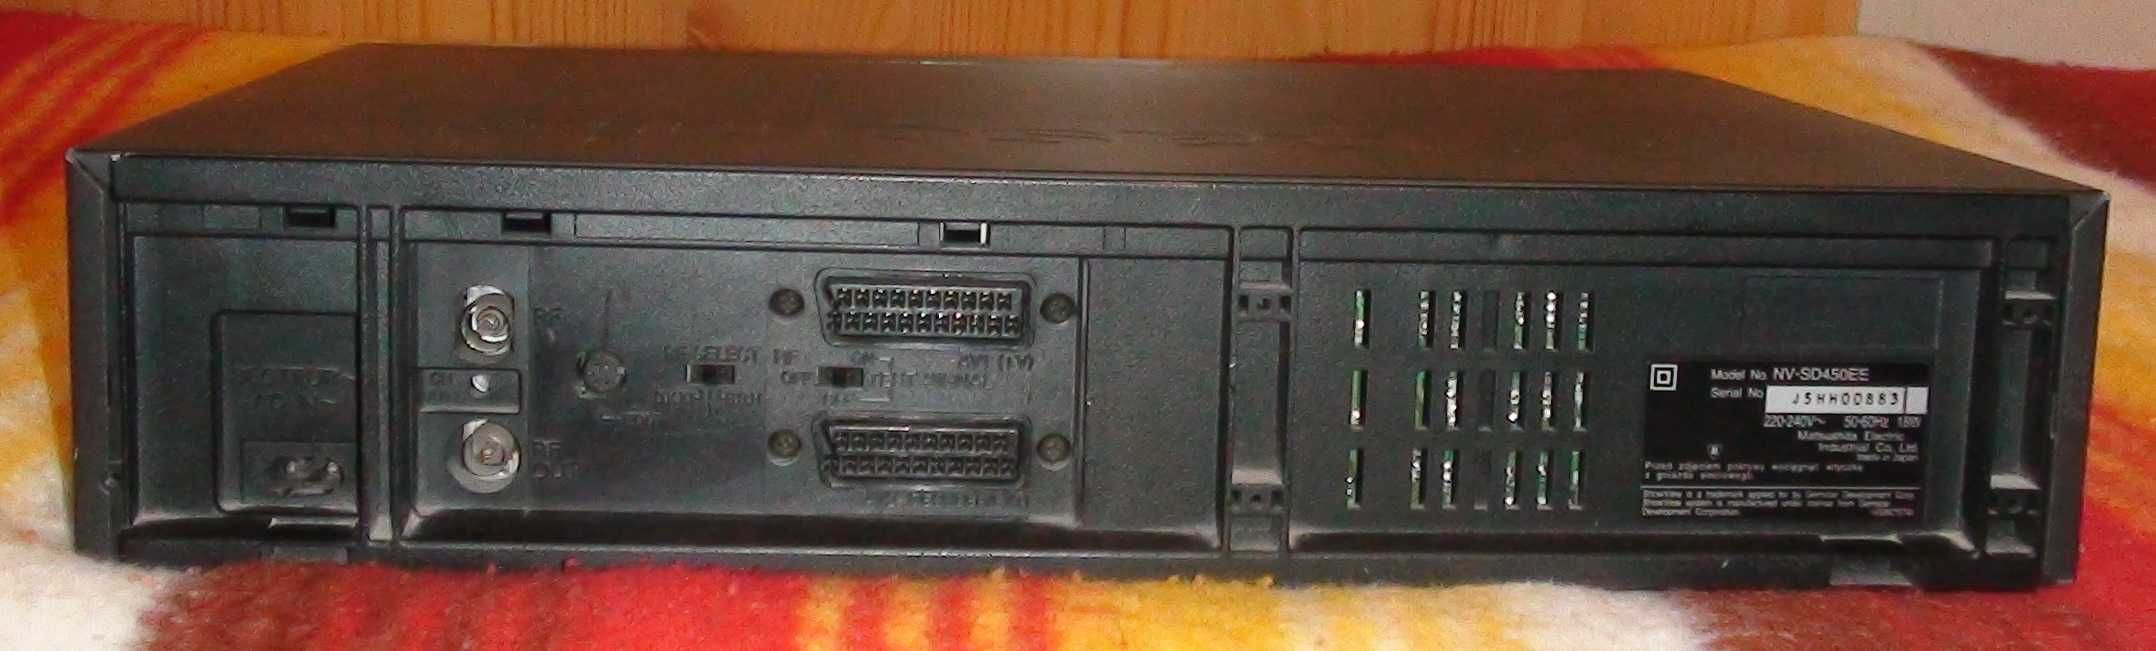 Magnetowid Panasonic NV-SD450EE